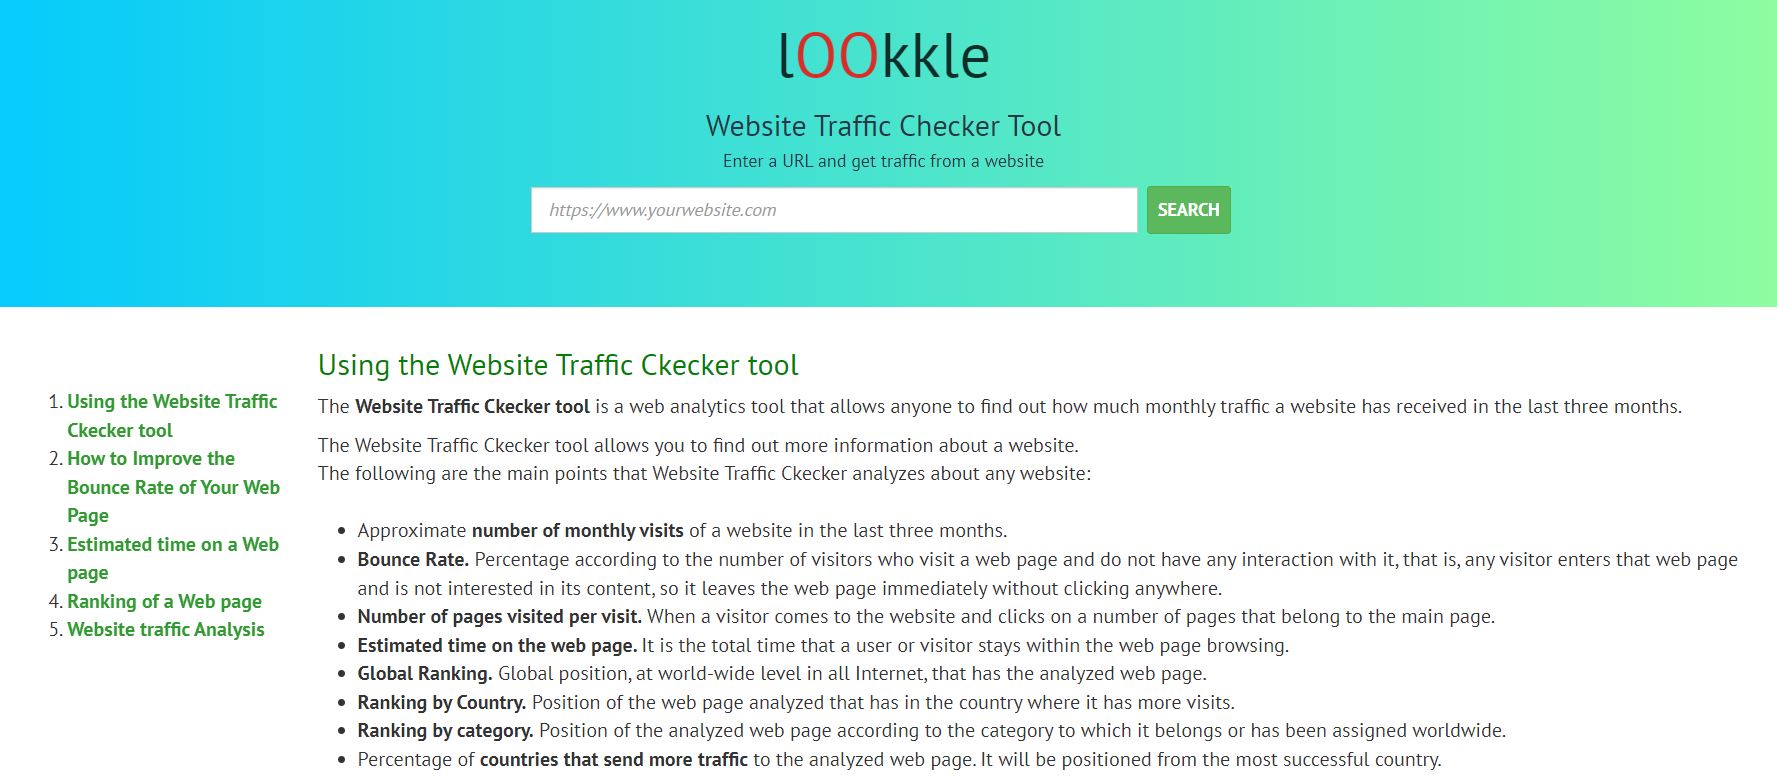 Lookkle Web Traffic Checker